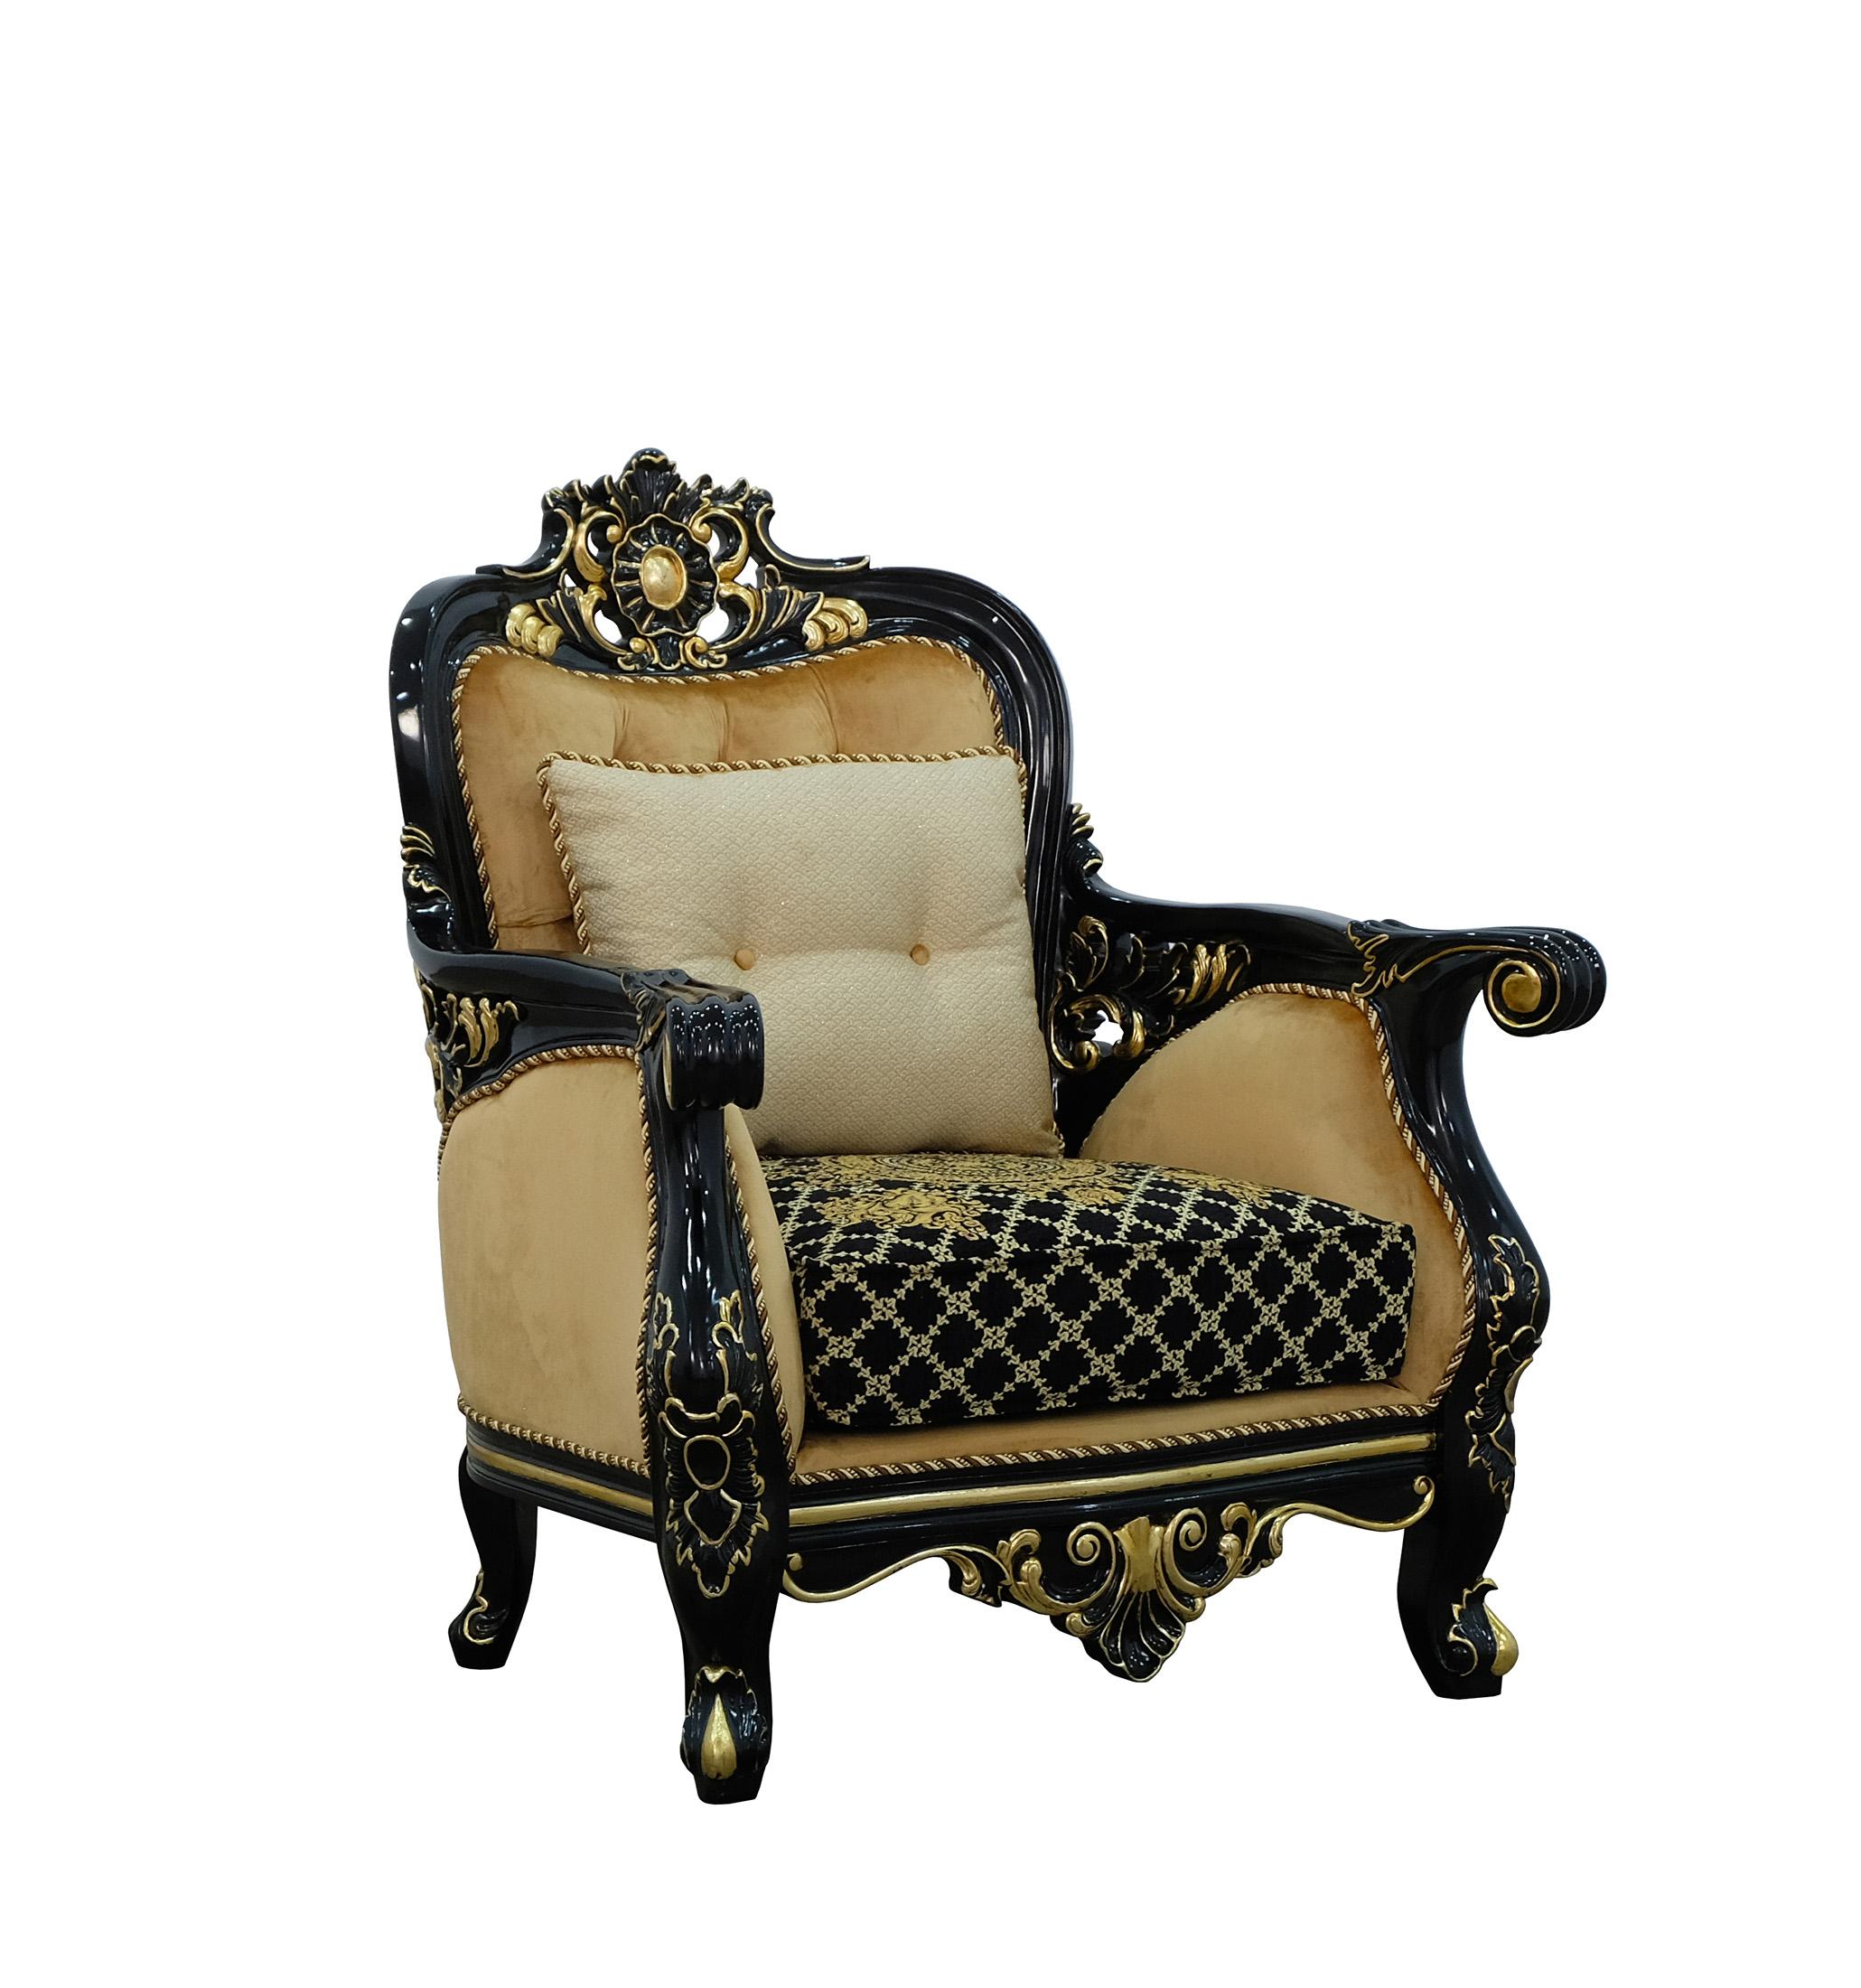 Classic, Traditional Arm Chair BELLAGIO III 30019-C in Antique, Gold, Black Velvet